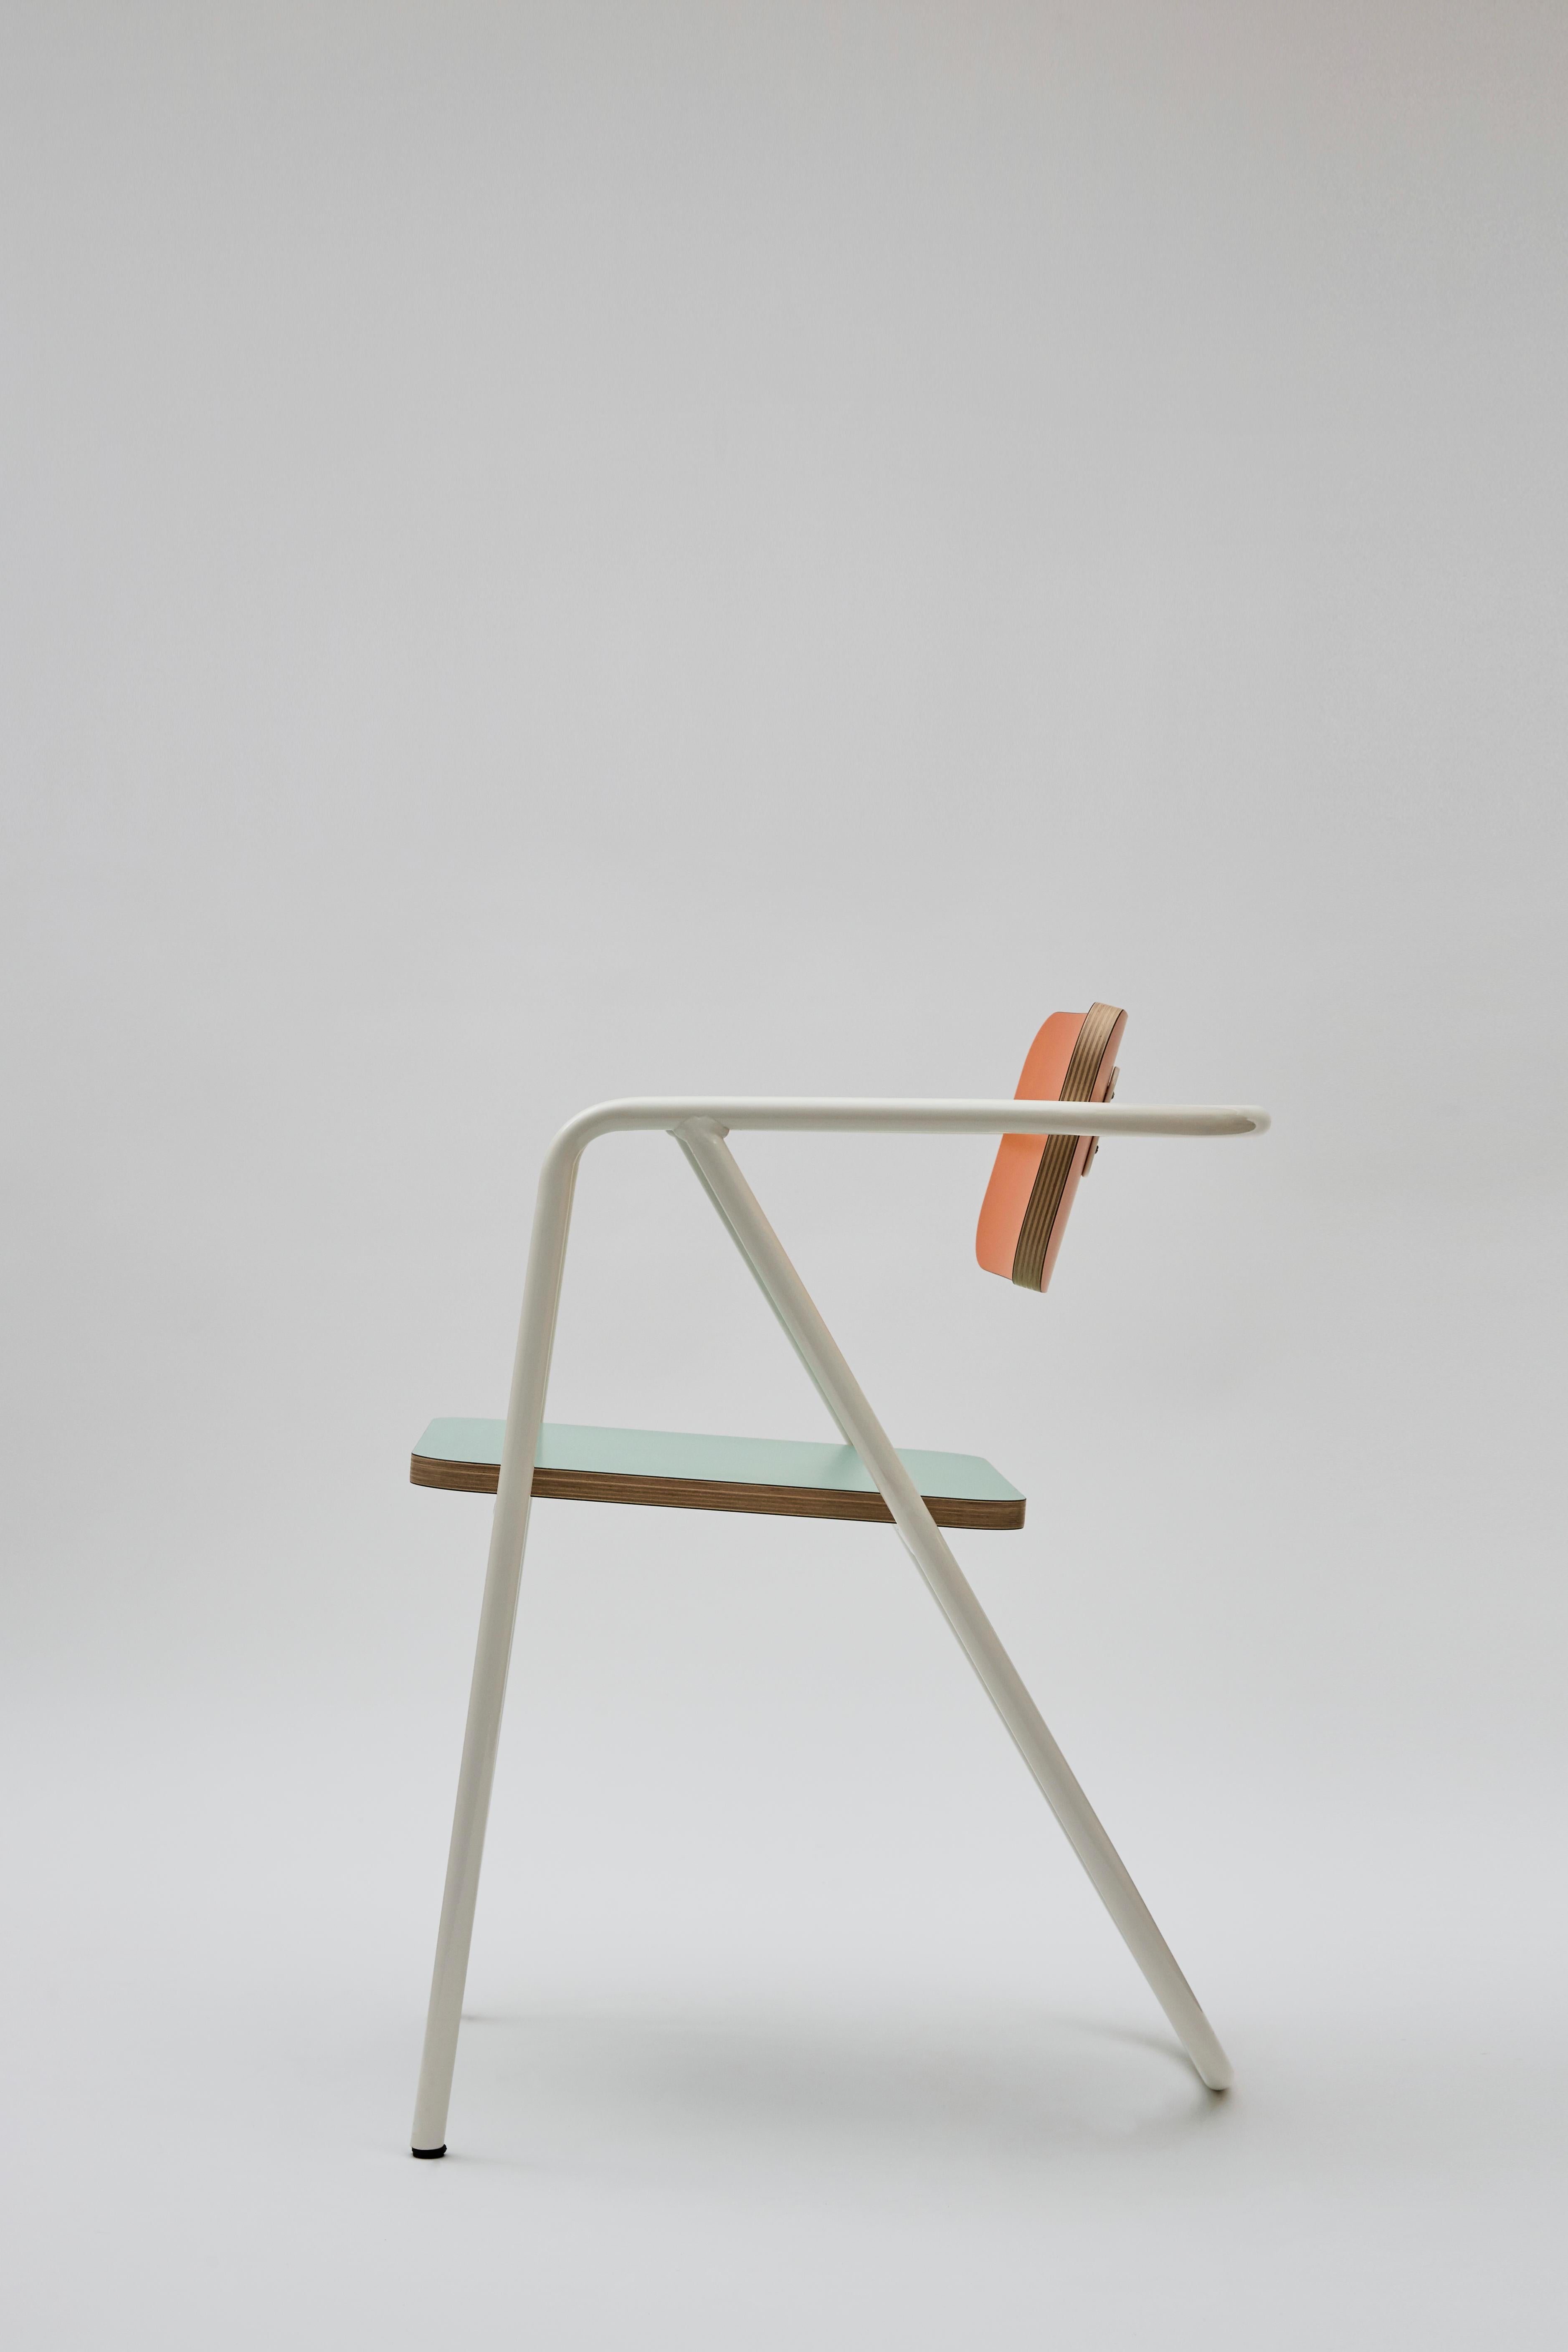 Other La Misciù Chair, White, Teal & Orange For Sale